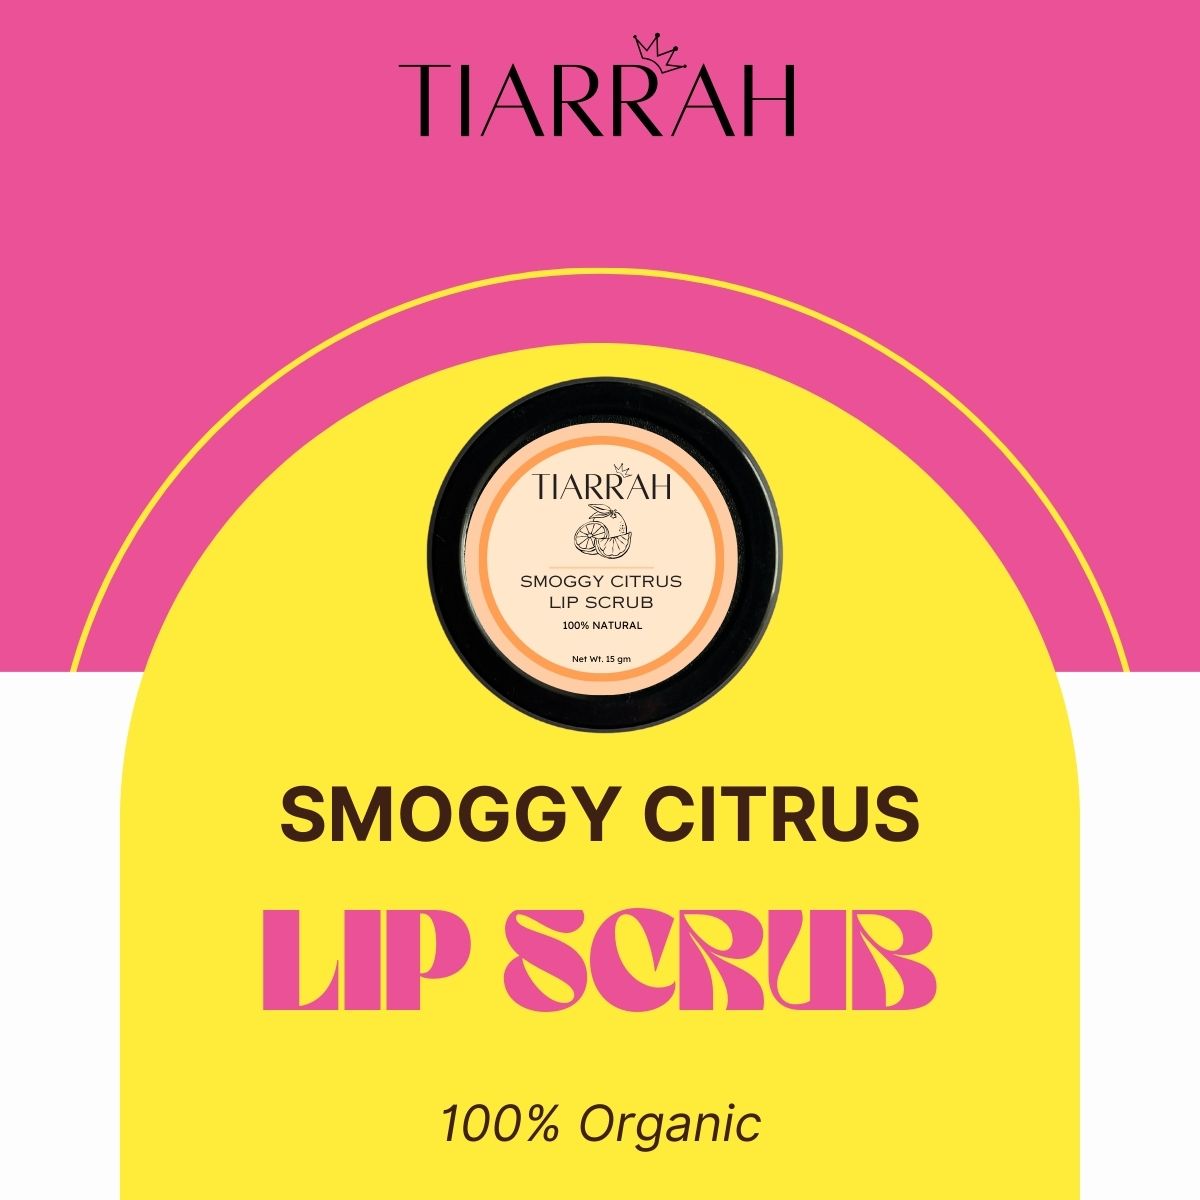 Tiarrah's Smoggy Citrus Lip Scrub: Natural & Non-Toxic - The Luxury Bath and Body Care Shop